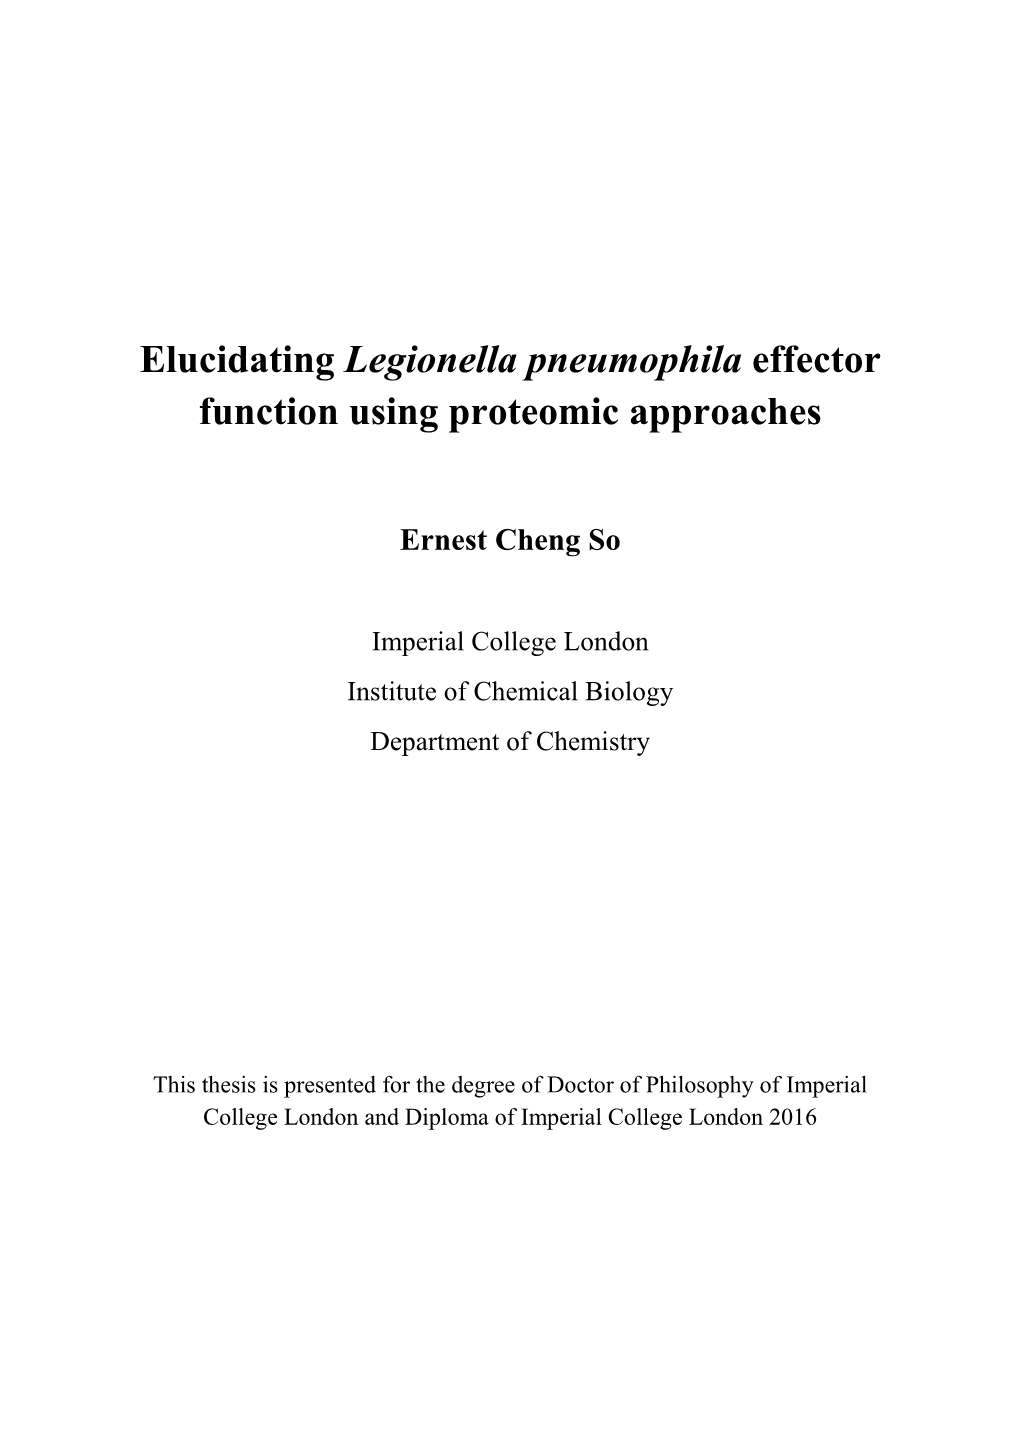 Legionella Pneumophila Effector Function Using Proteomic Approaches